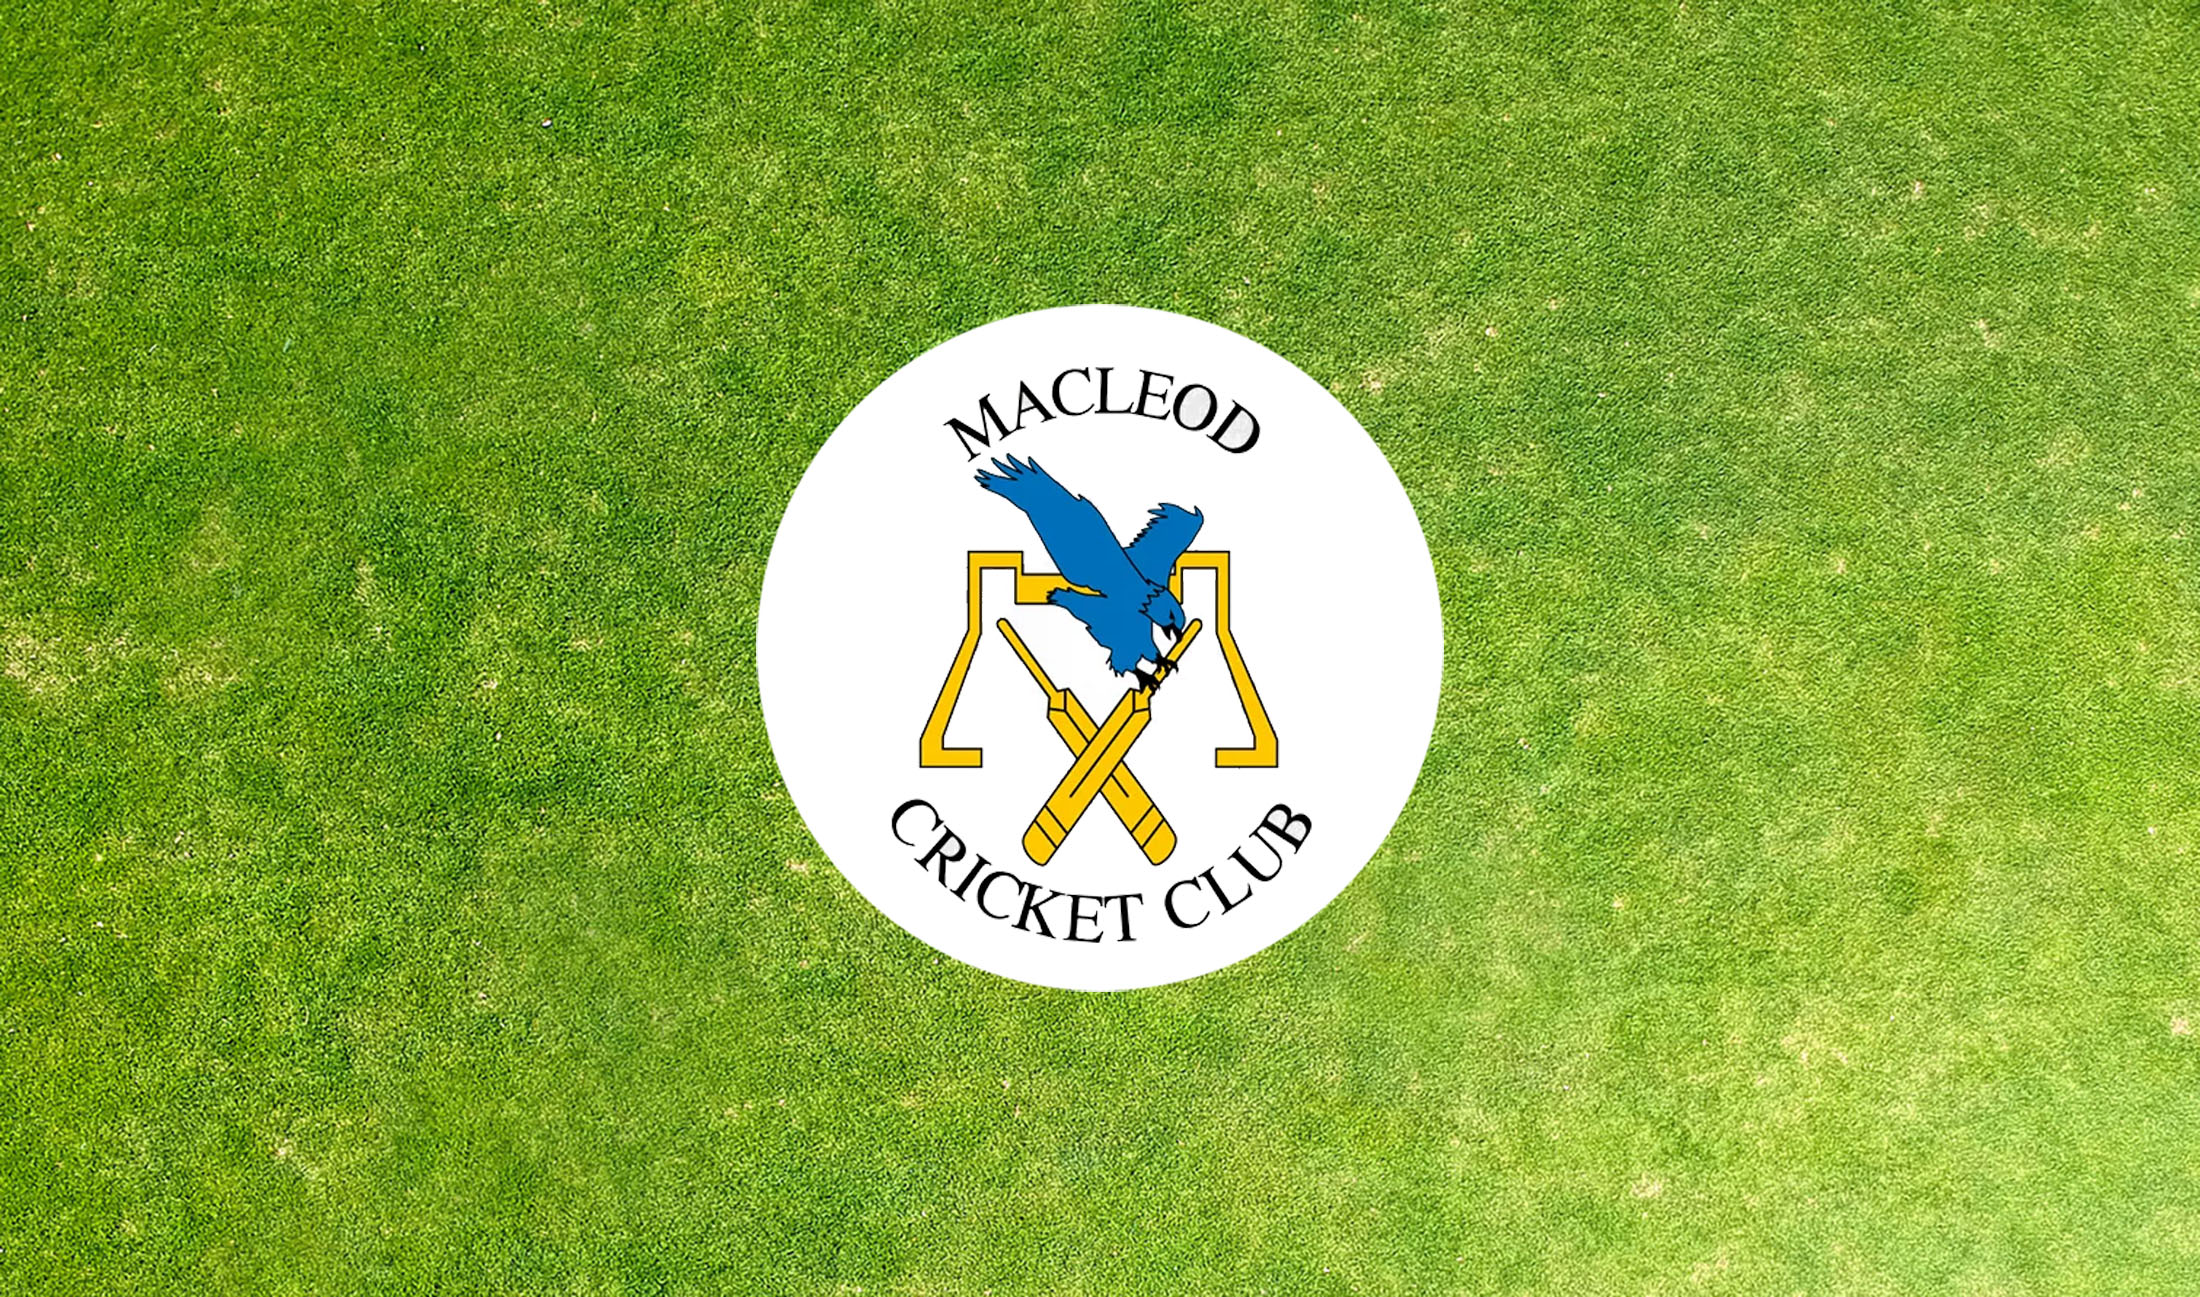 Macleod Cricket Club seeking Senior Coach for season 2022/23